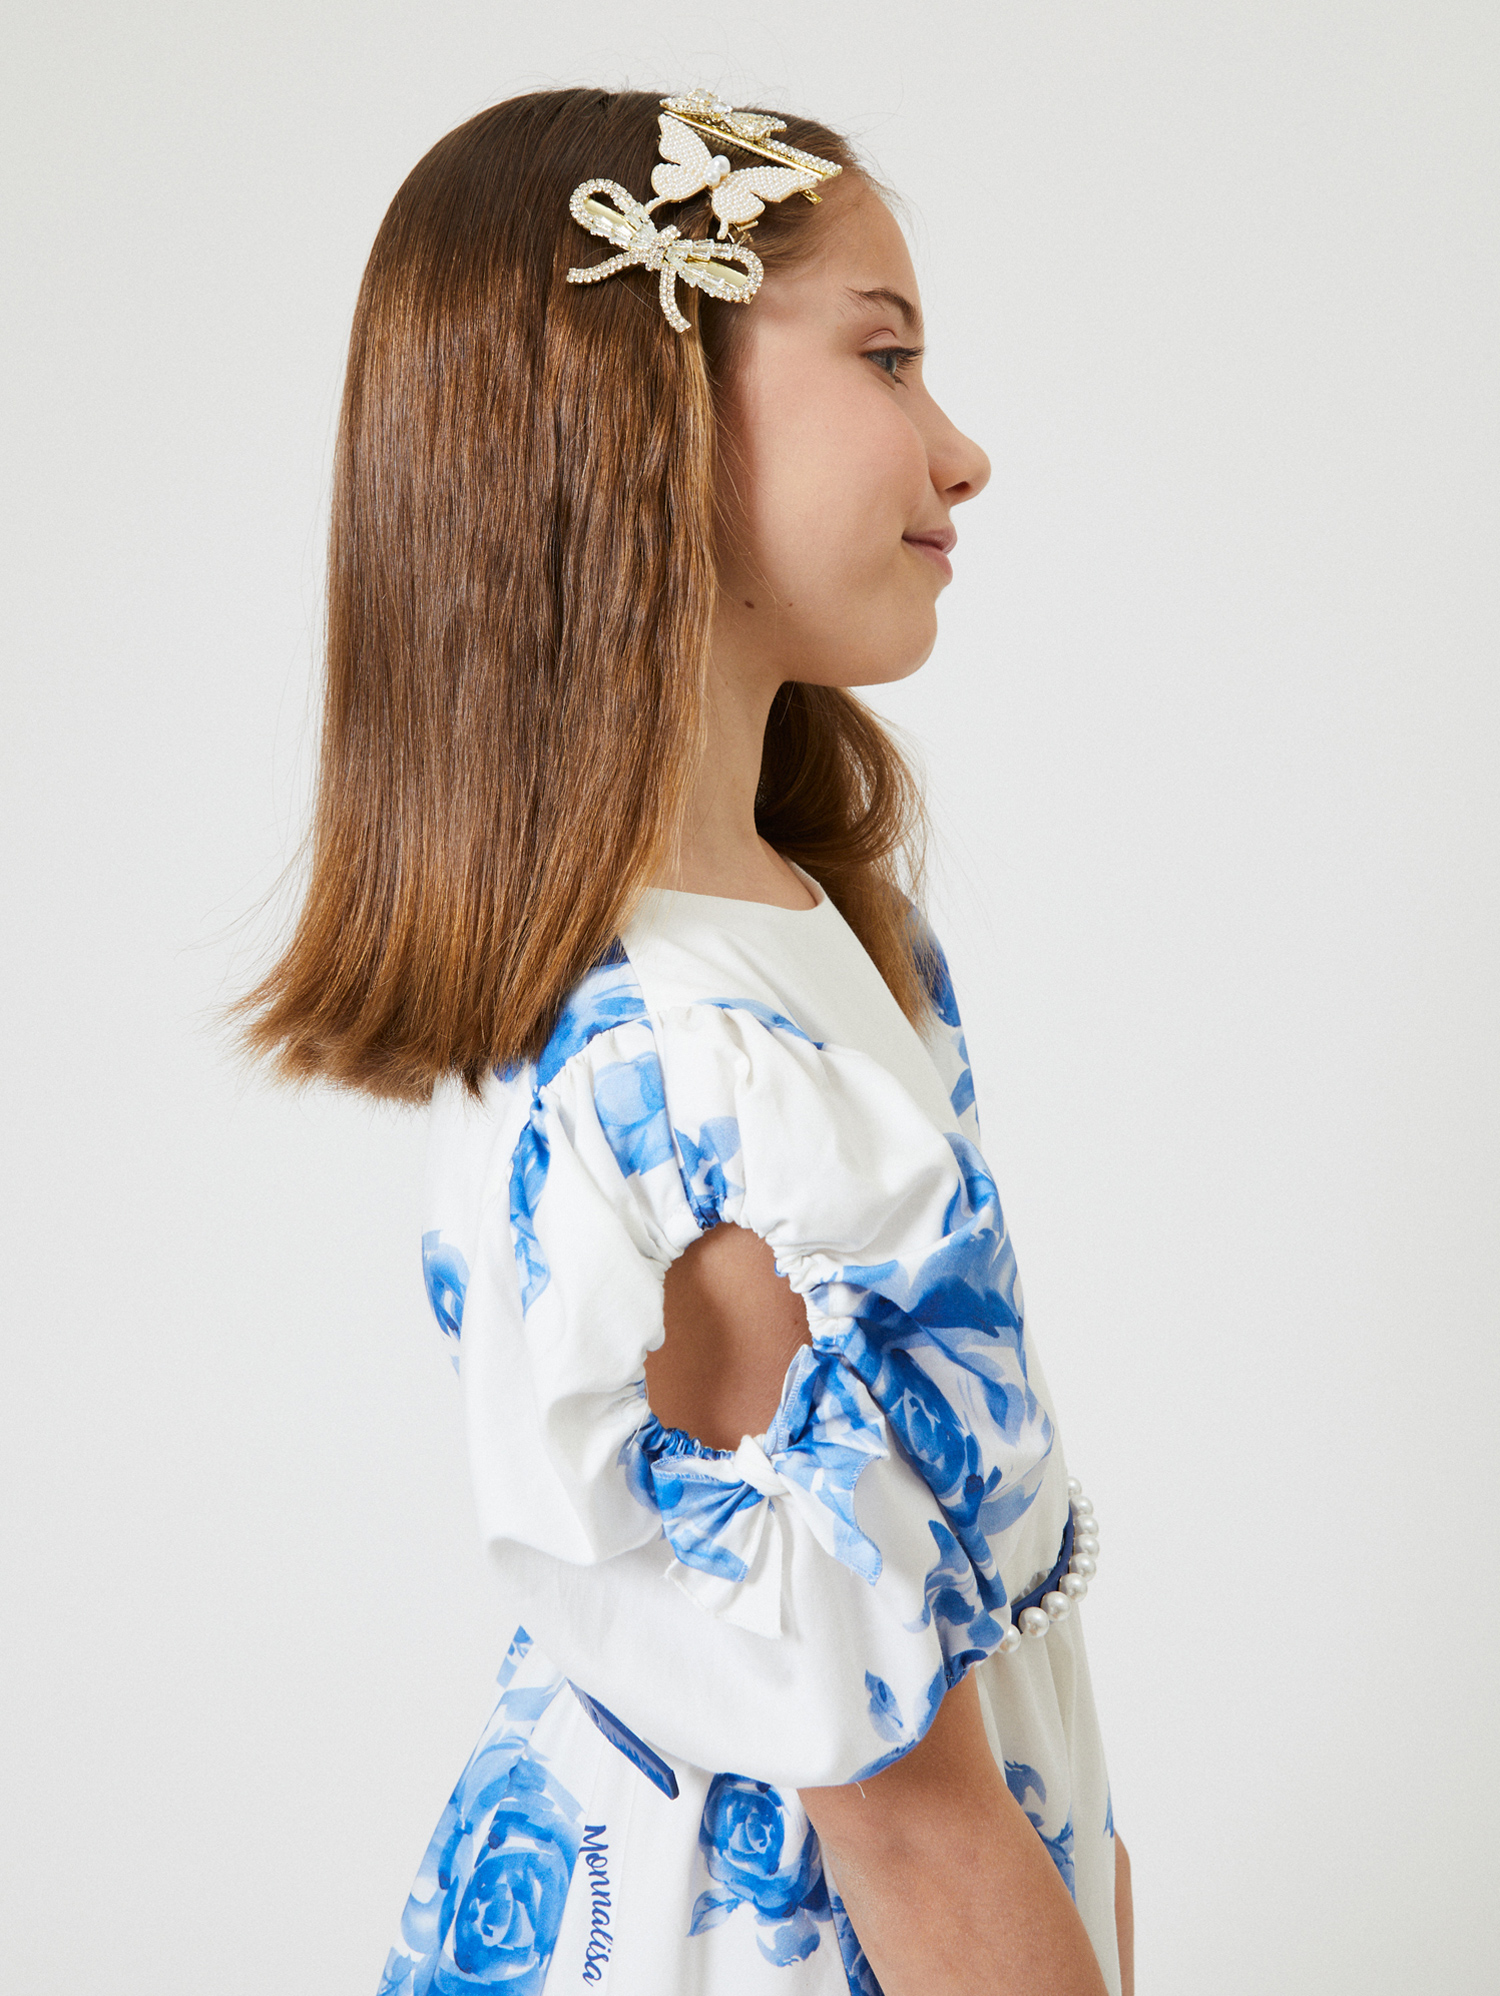 Shop Monnalisa Rose Print Cotton Dress In Cream + Electric Blue